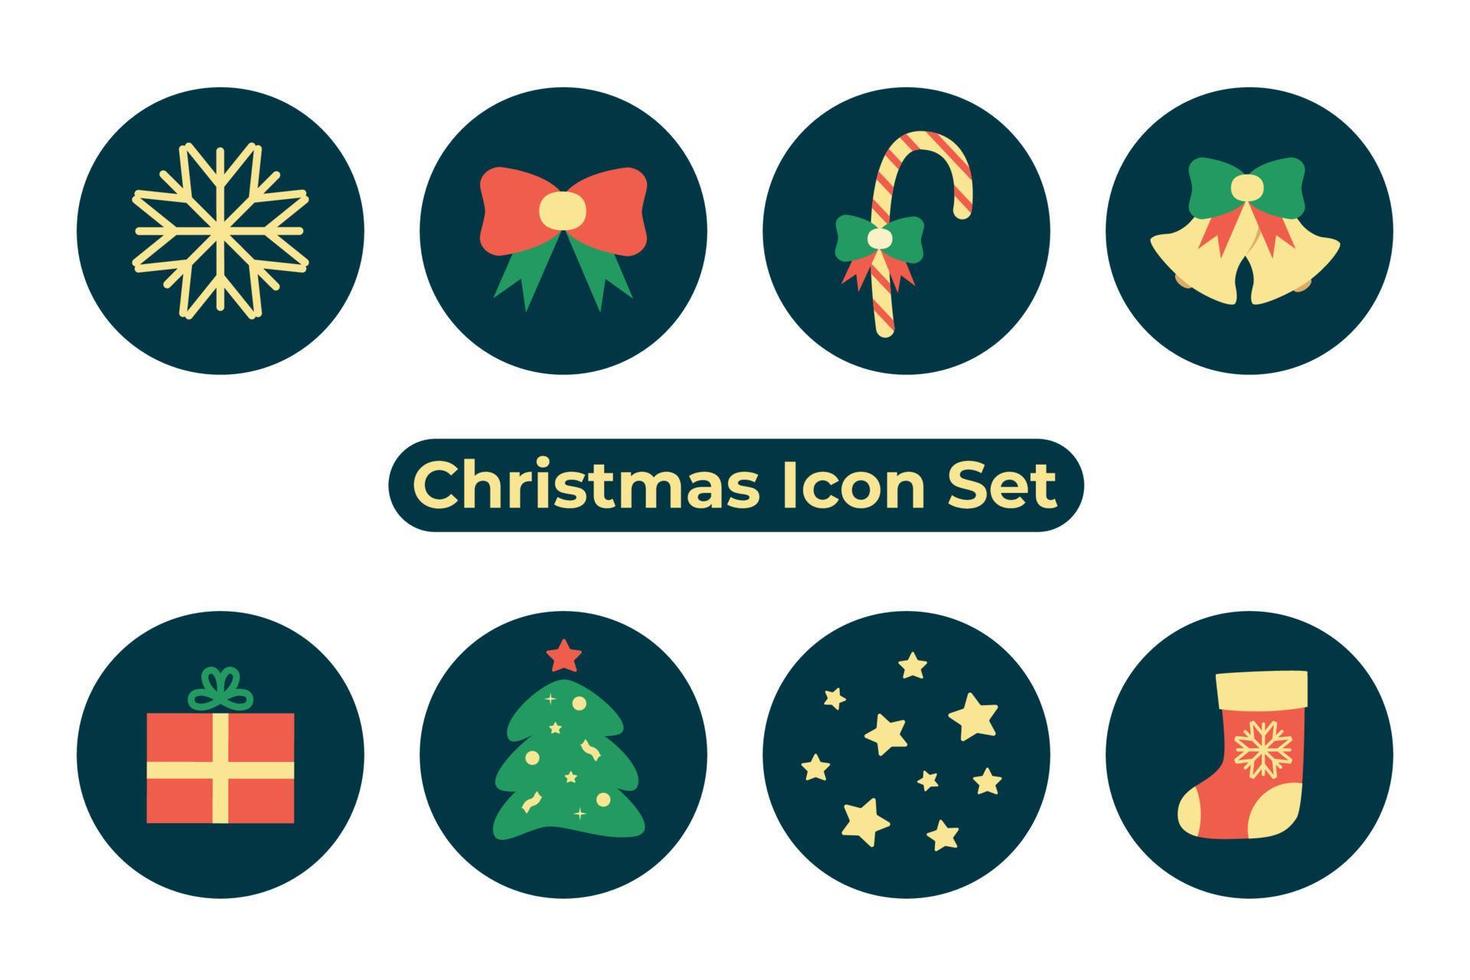 Christmas icons set. Vector illustration of New Year symbols.